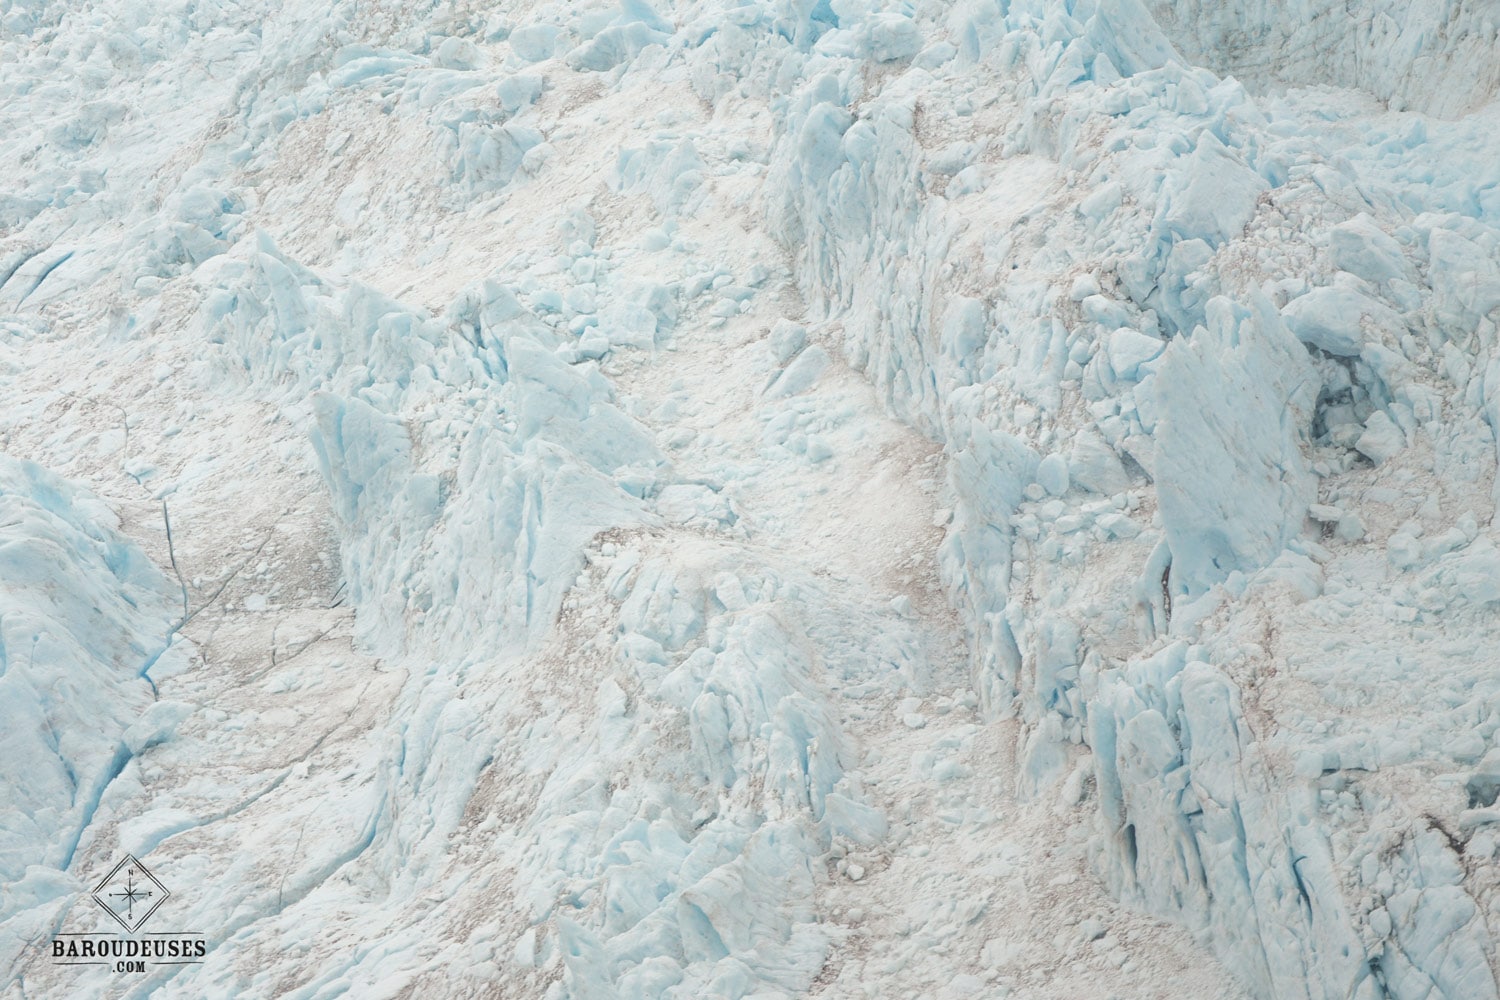 Glace - Glacier Franz Josef